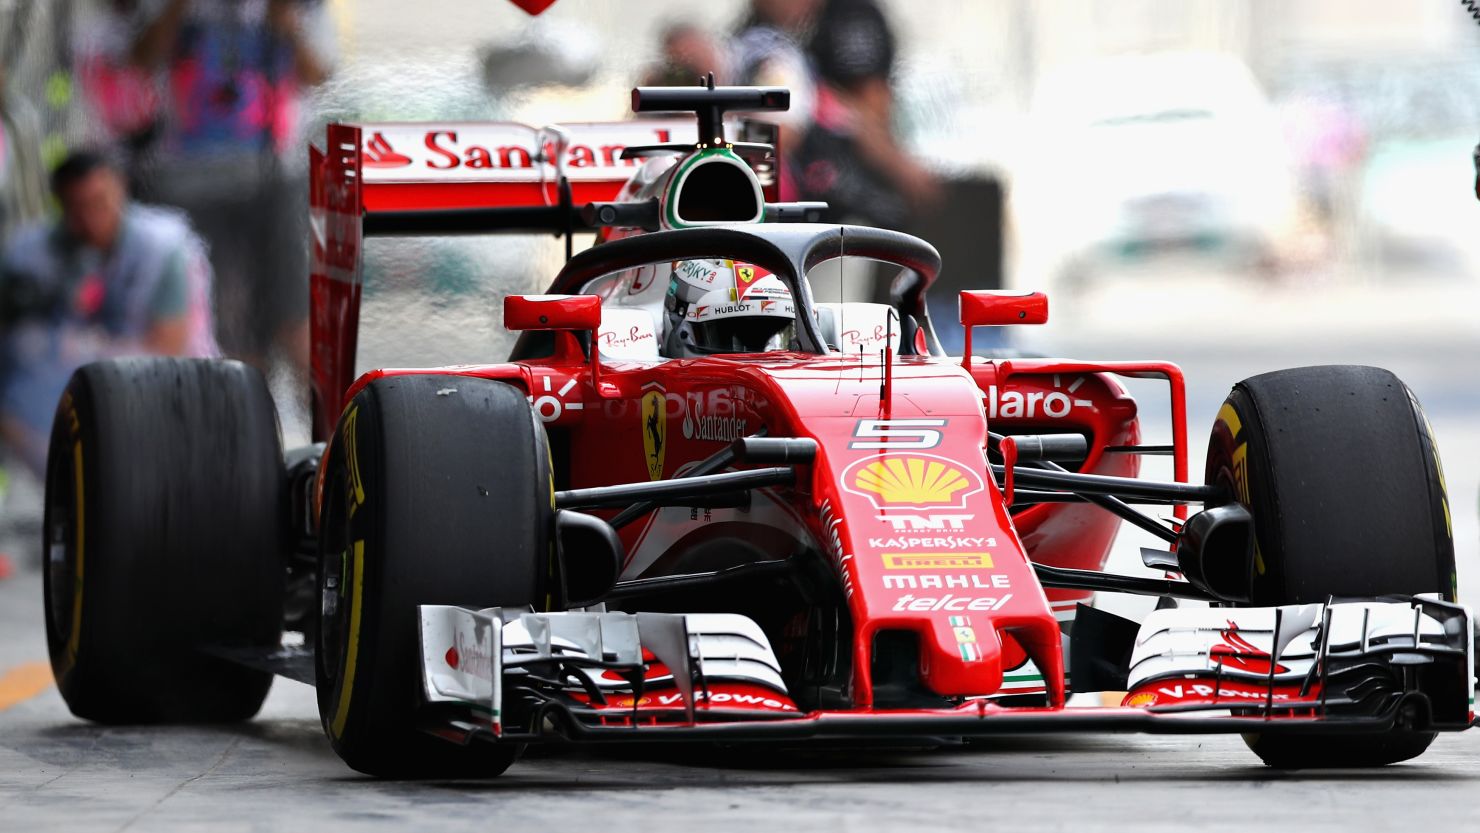 Sebastian Vettel's Ferrari sports the "Halo" during practice at the 2016 Abu Dhabi Grand Prix.